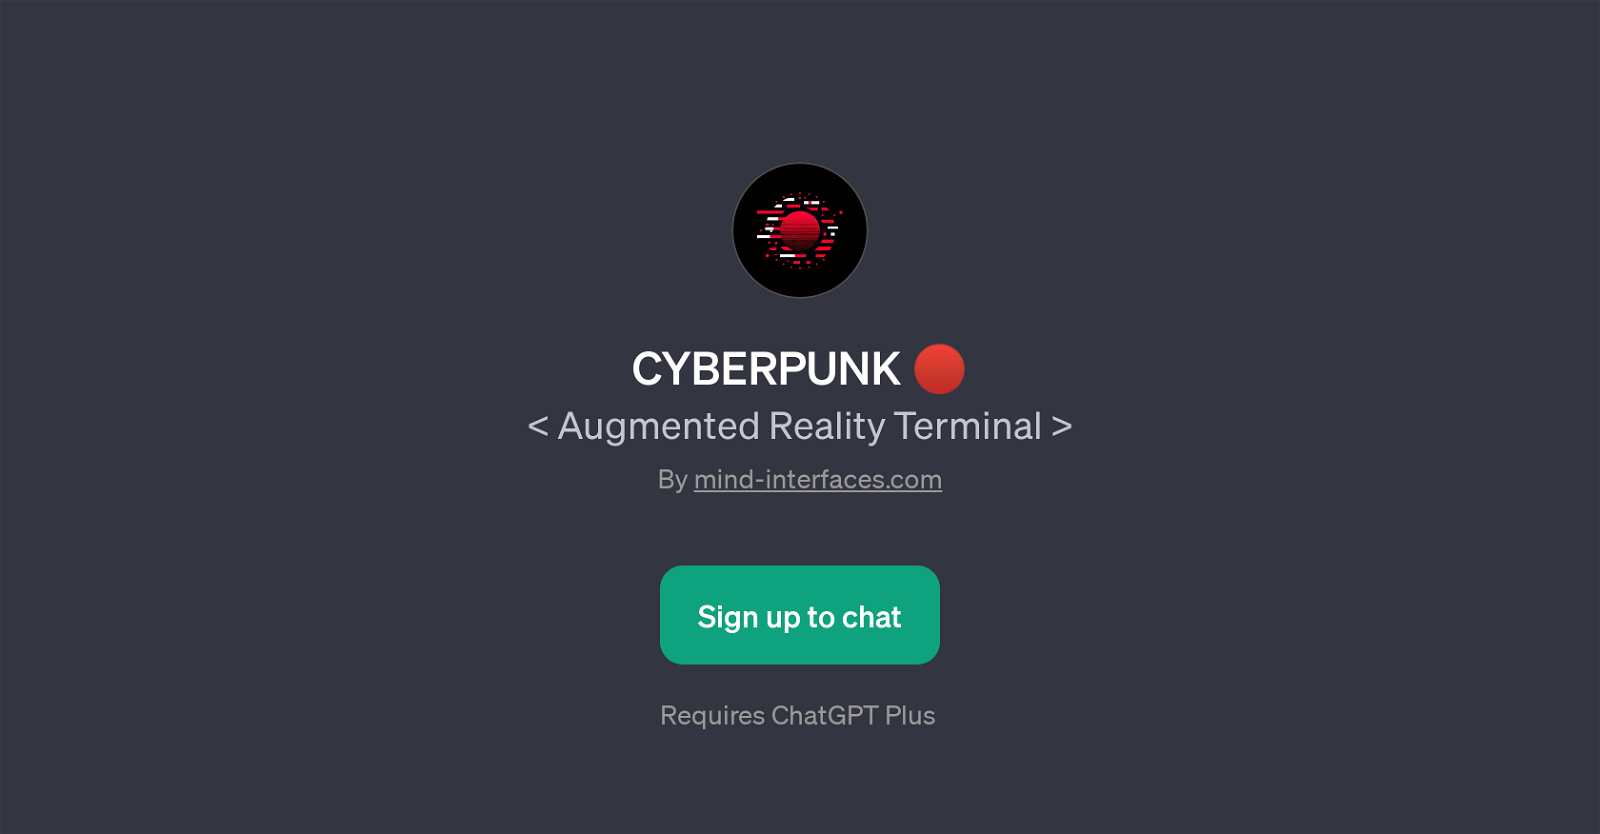 CYBERPUNK website